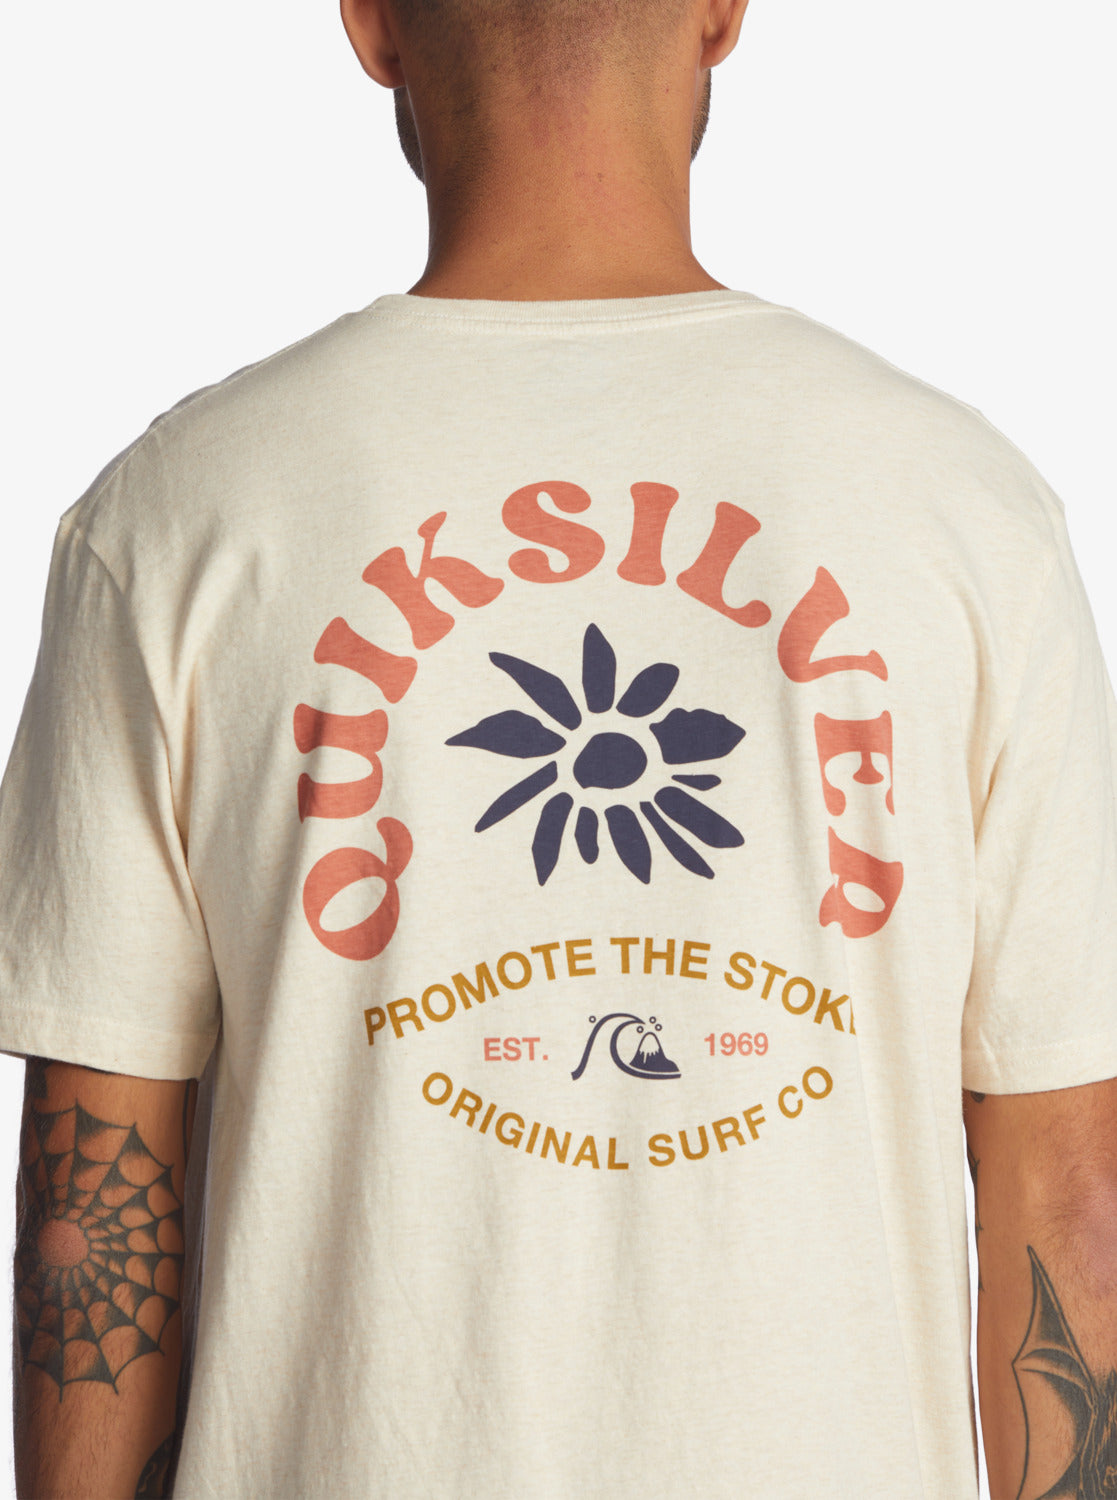 Quiksilver Simple Script Stoke the - Tees Promote T-shirt